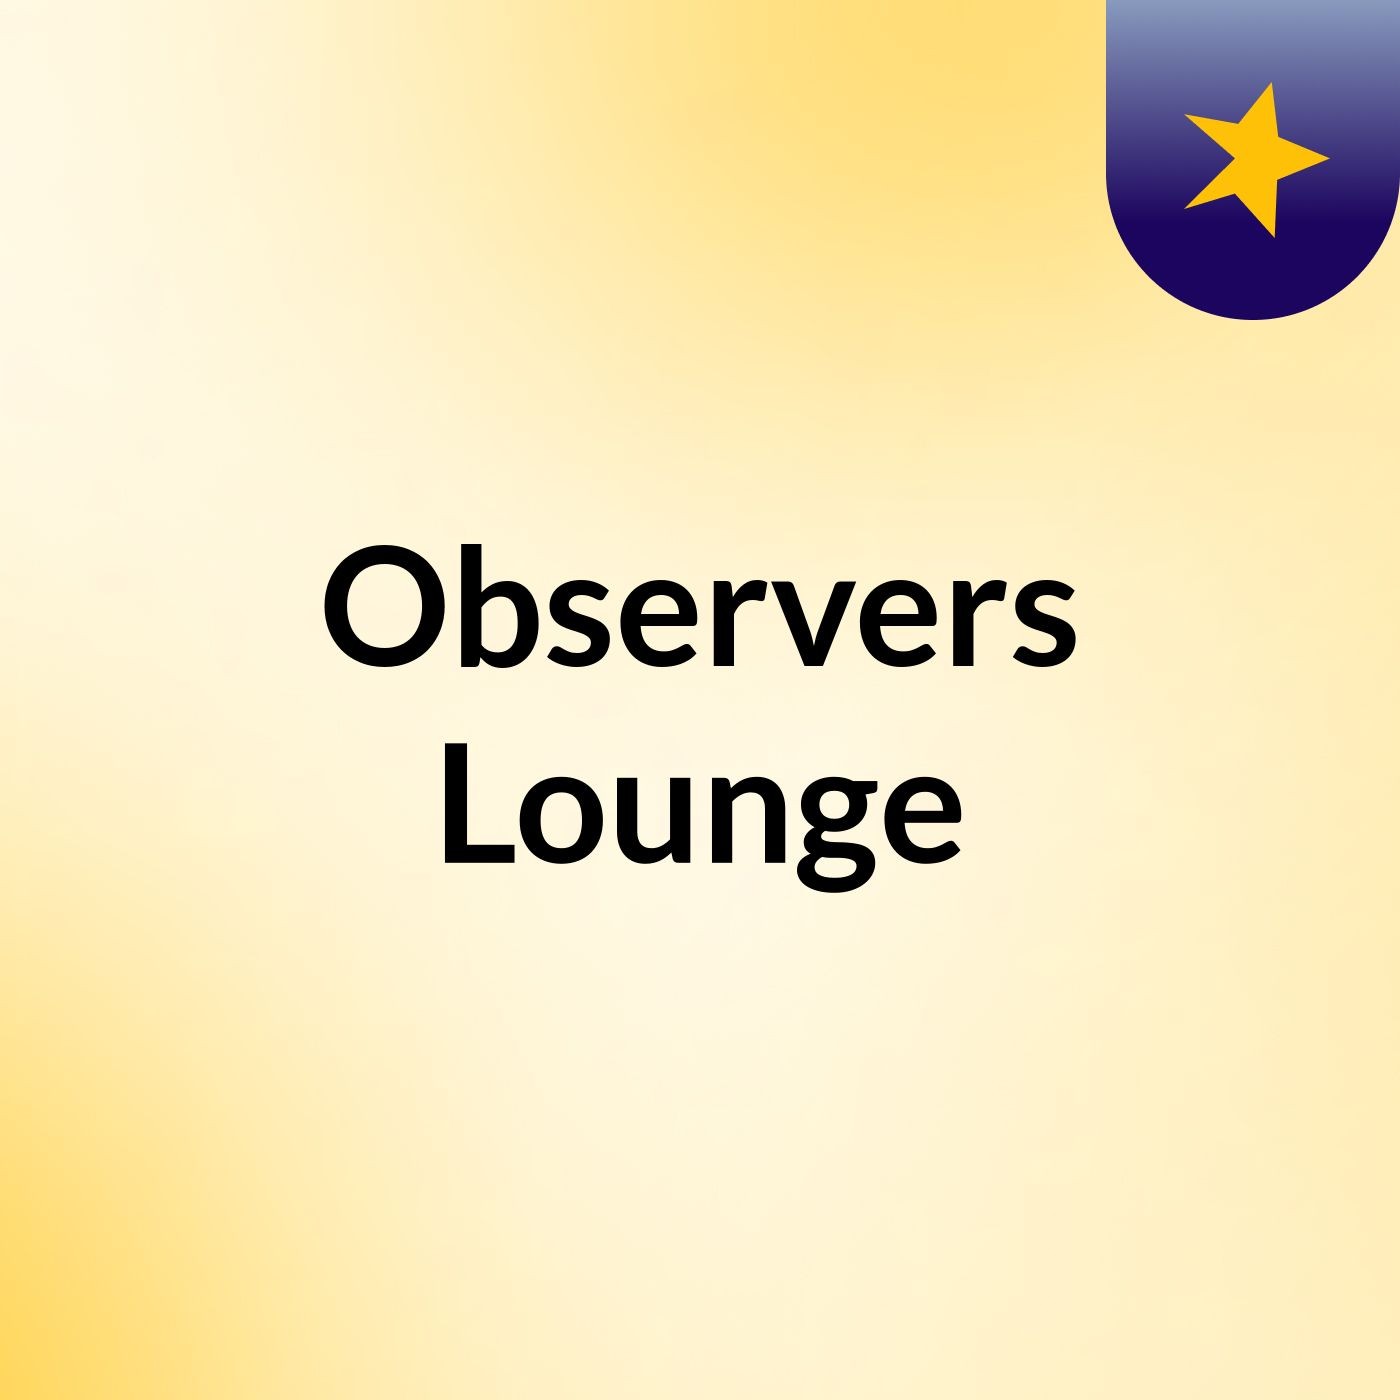 Observers Lounge